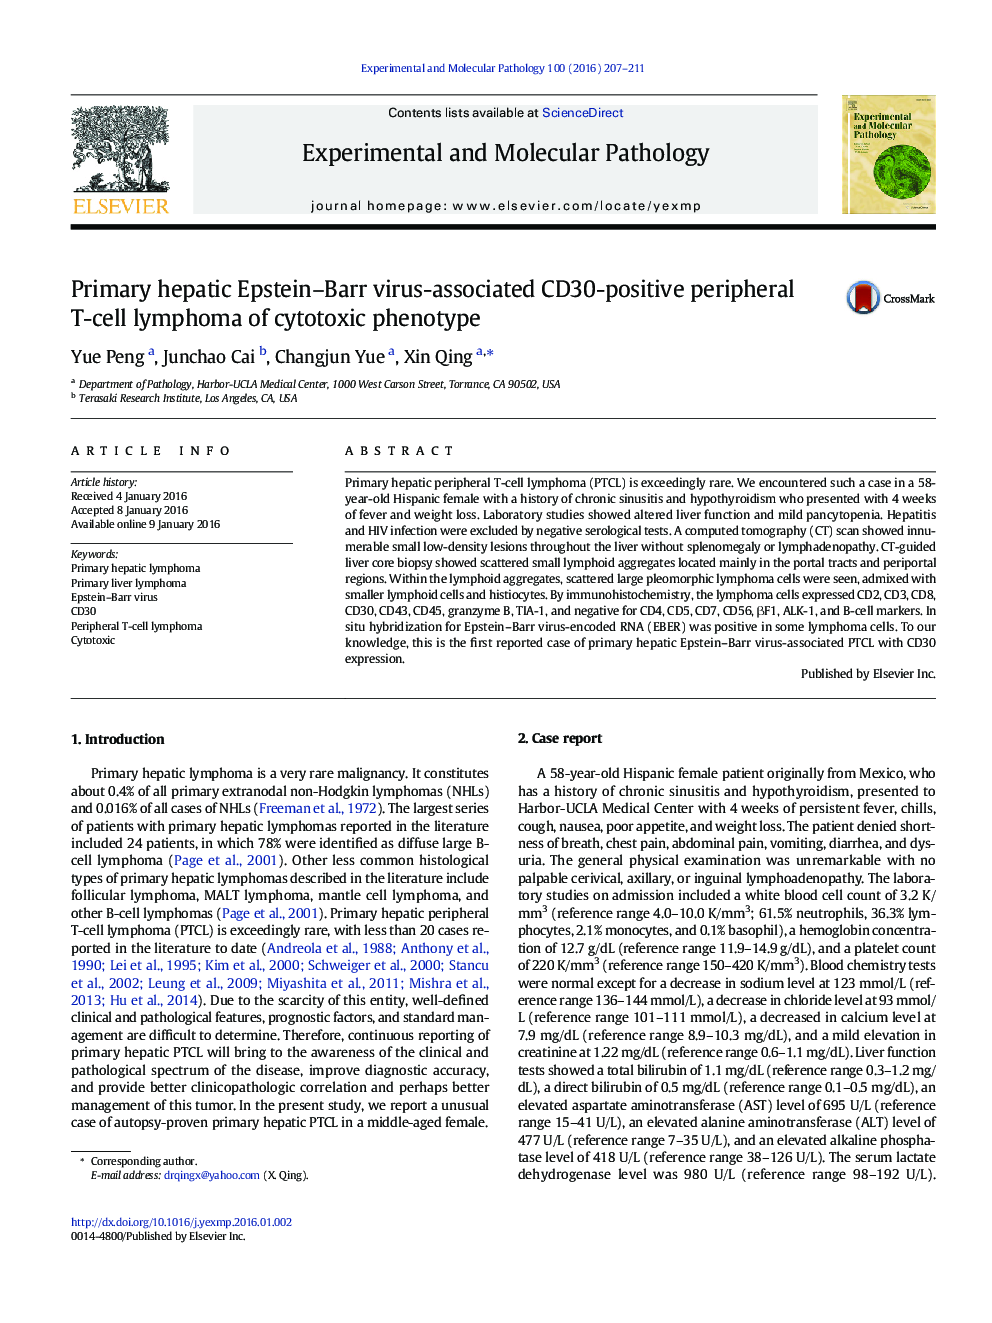 لنفوم سلول T محیطی CD30 مثبت مرتبط با ویروس اپشتین بار کبدی اولیه فنوتیپ سیتوتوکسیک